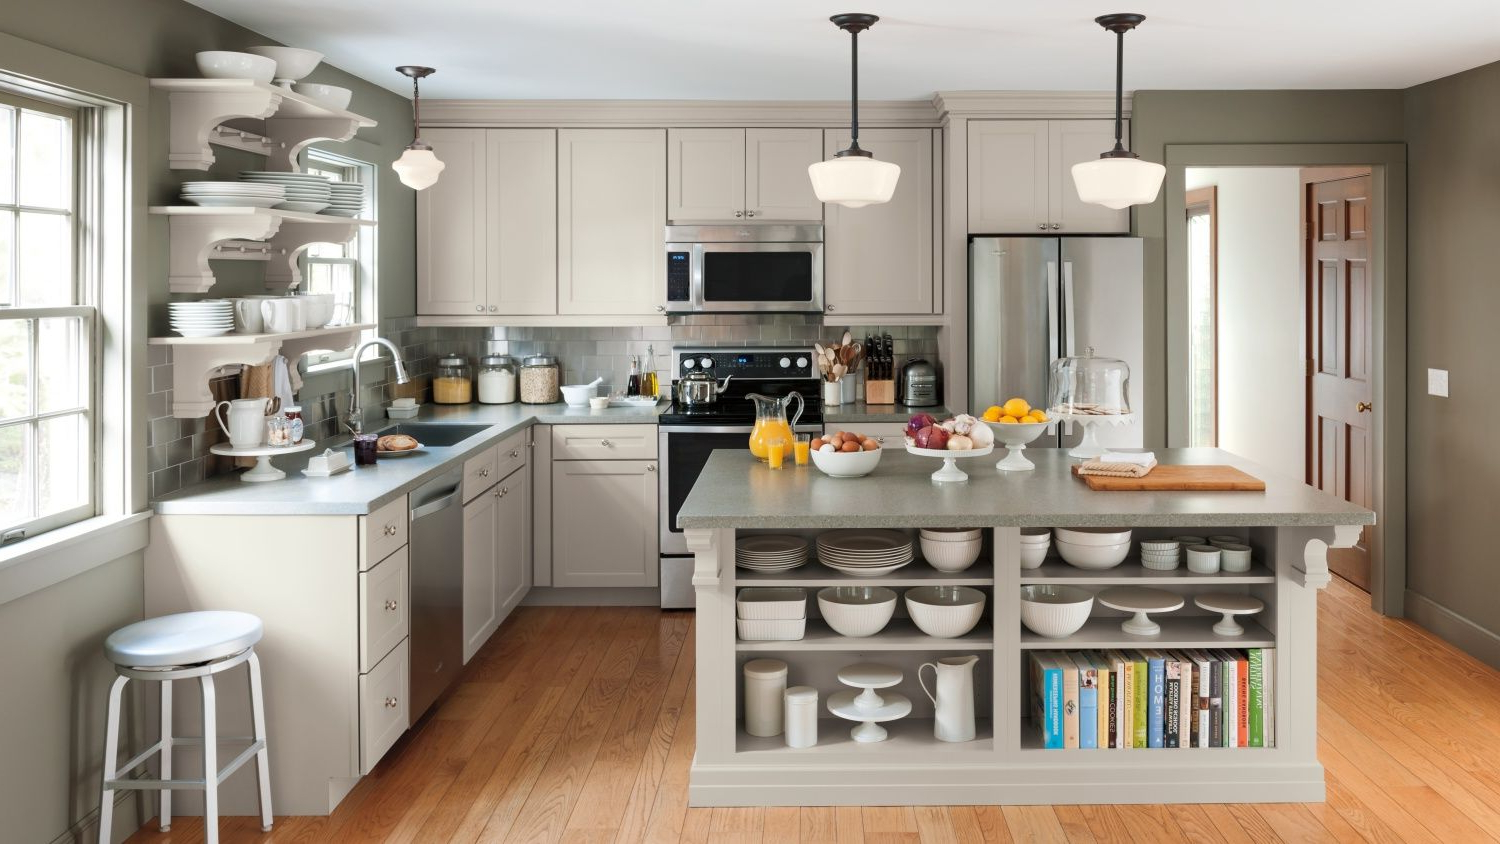 Select Your Kitchen Style With Images Kitchen Style Kitchen Design Martha Stewart Kitchen